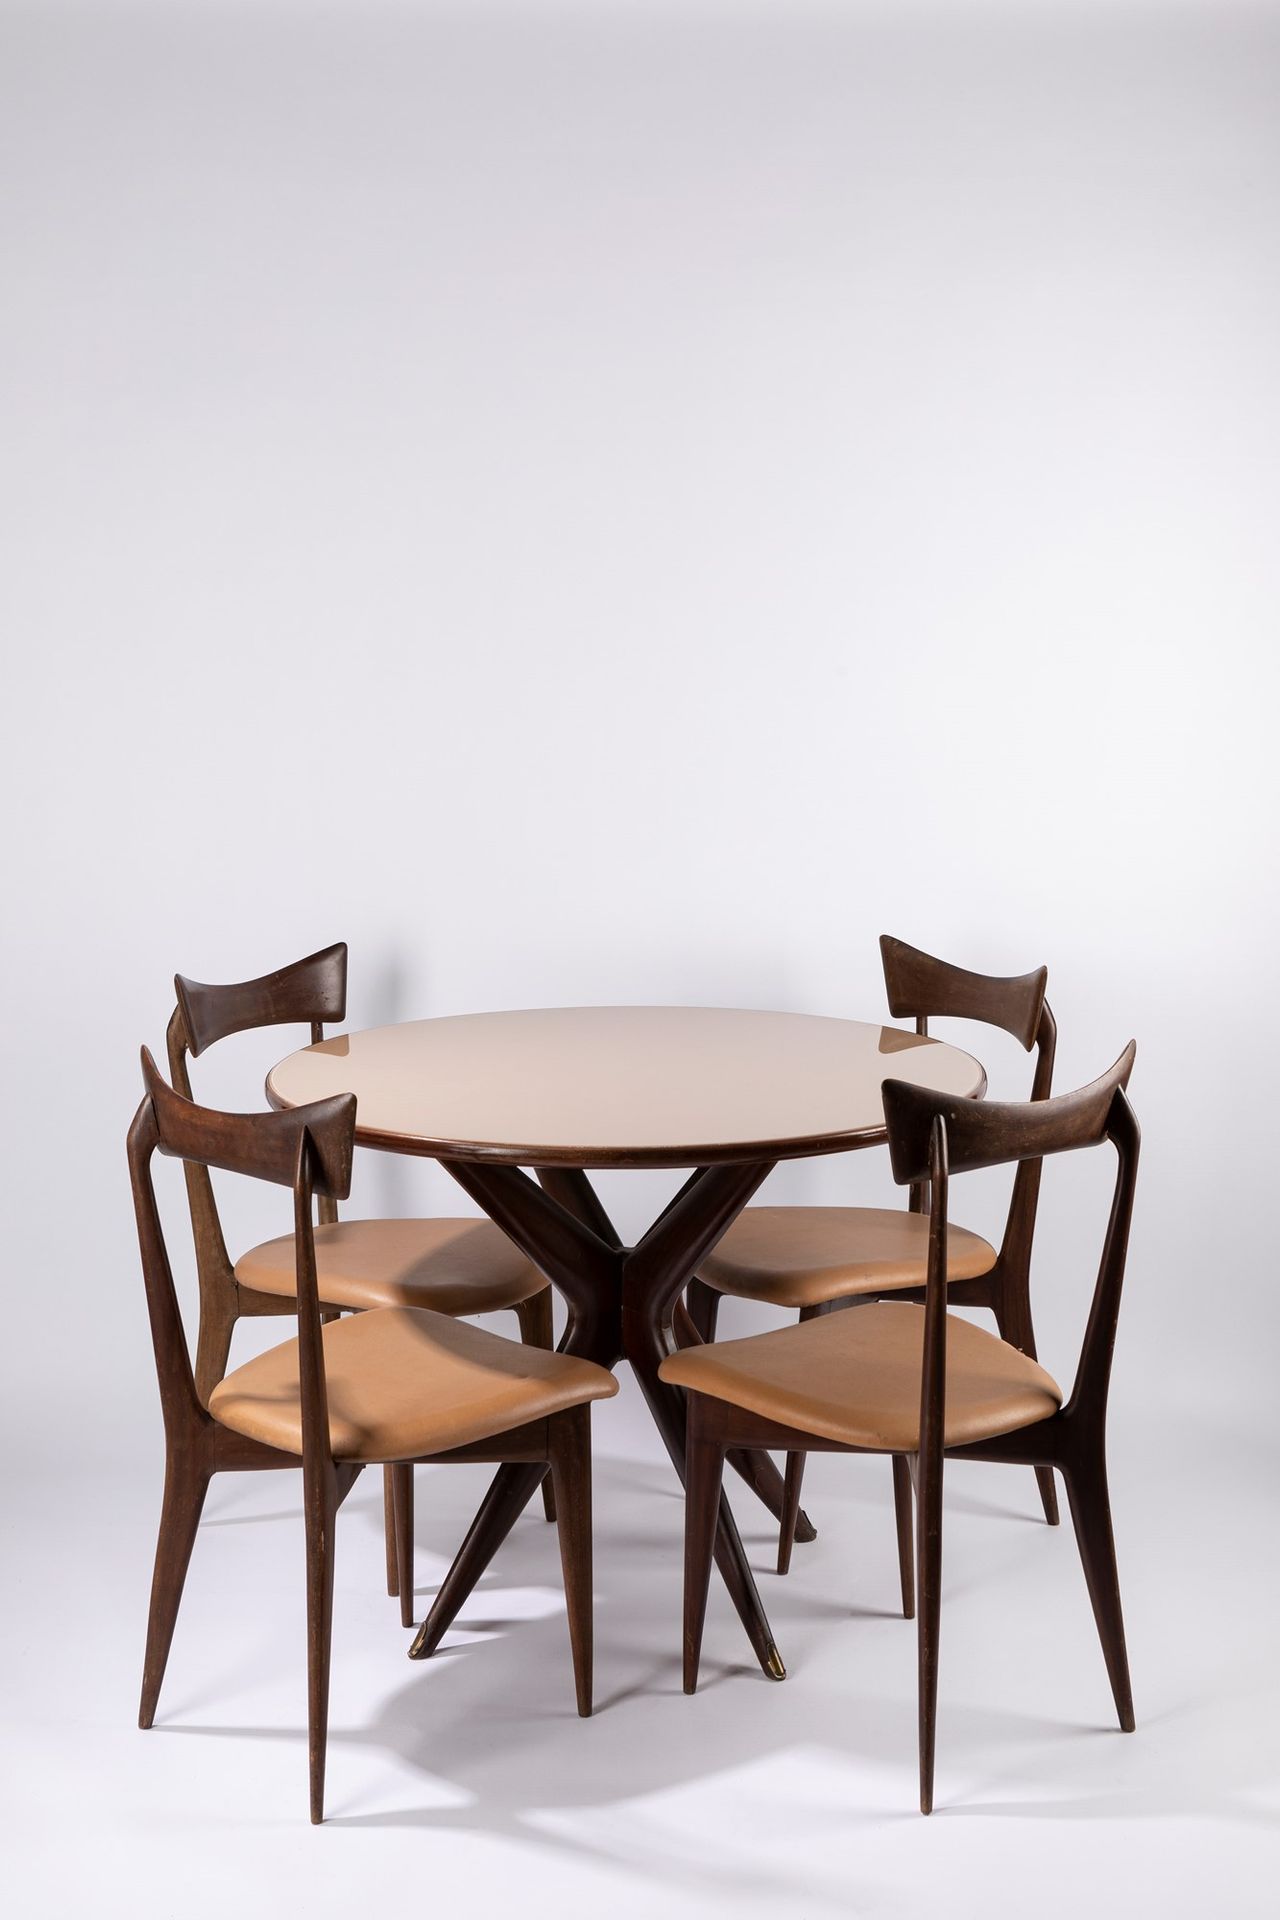 Ico & Luisa Parisi Table and four chairs, 1950 ca.

Table h 78 x diam 100 cm - c&hellip;